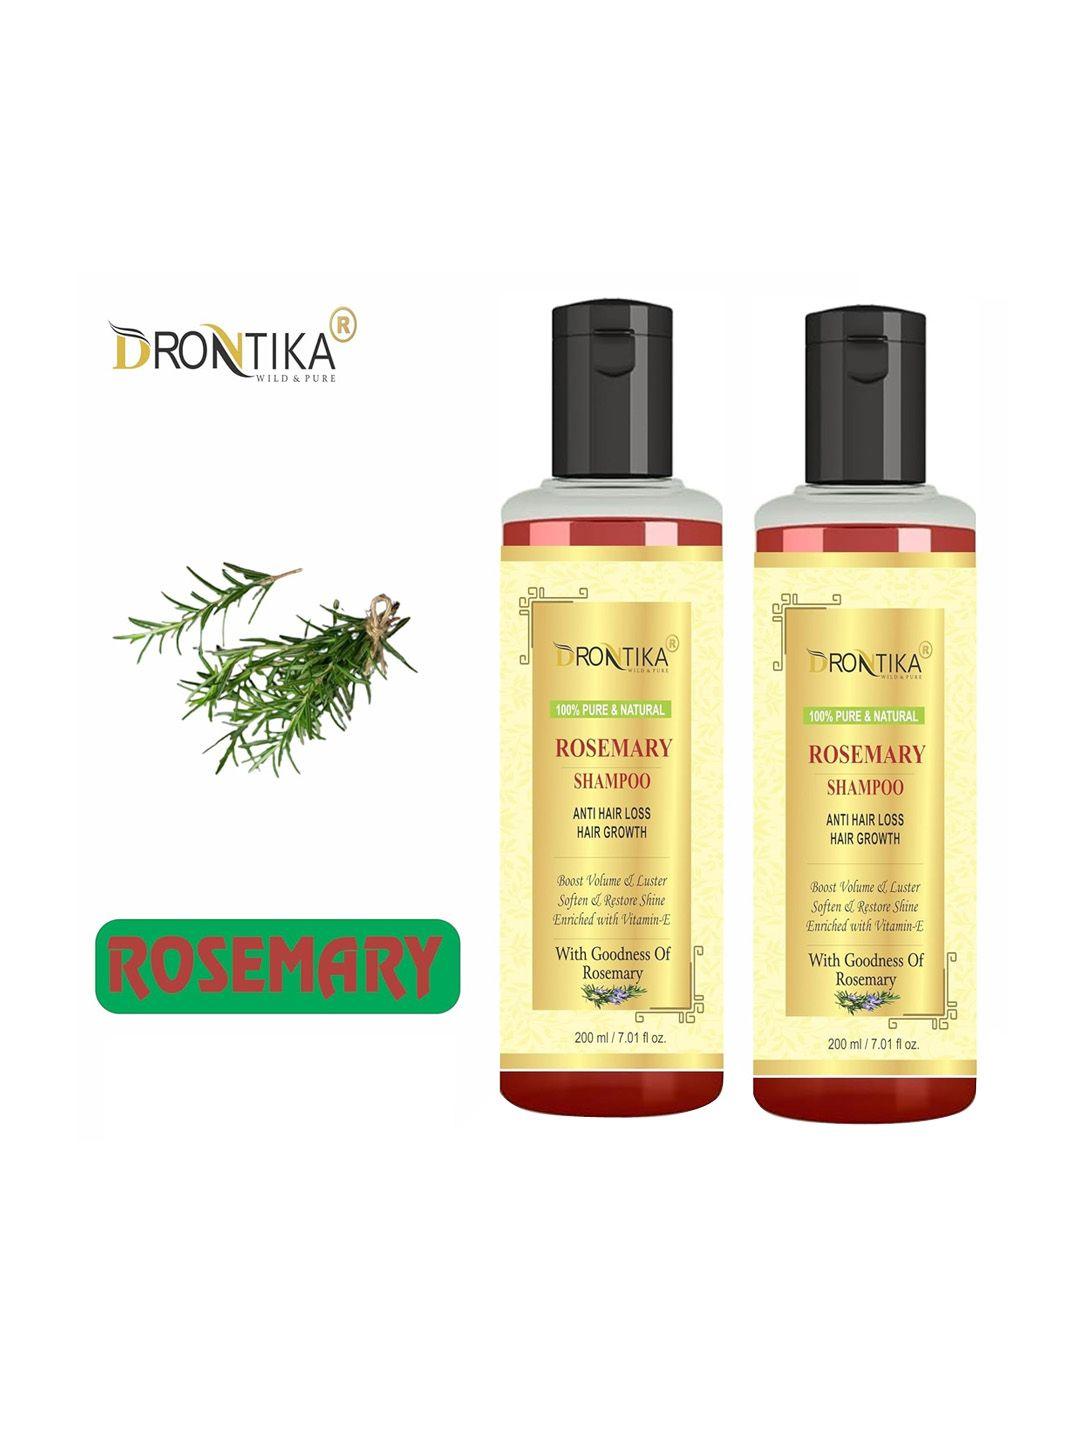 drontika set of 2 pure & natural rosemary shampoo for anti hair loss - 200ml each